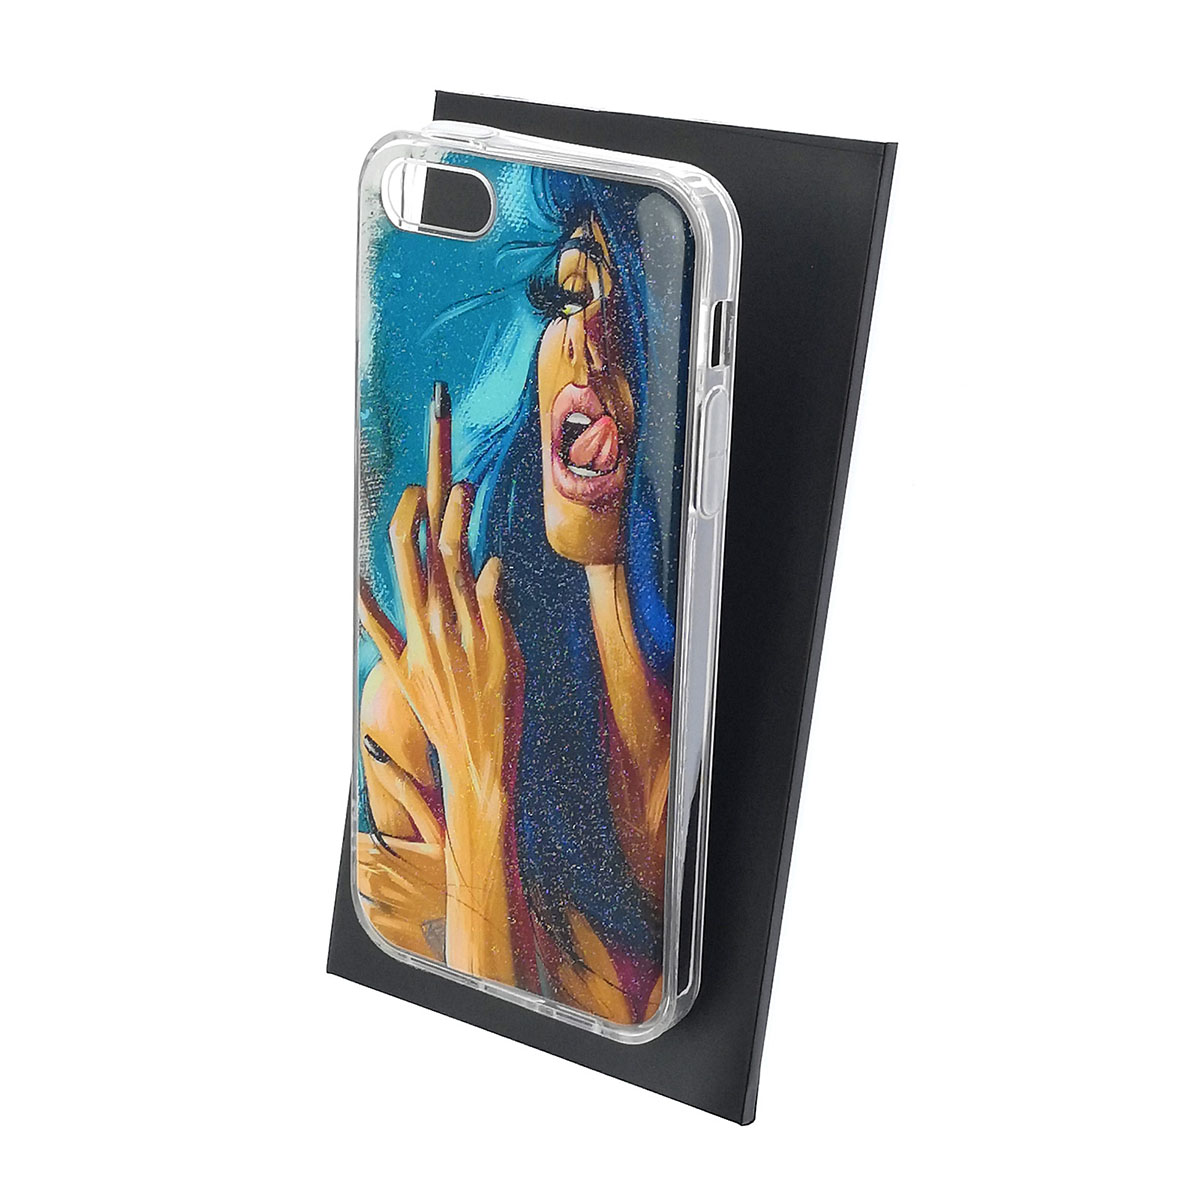 Чехол накладка для APPLE iPhone 5, iPhone 5G, iPhone 5S, iPhone SE, силикон, блестки, глянцевый, рисунок Девушка с синими волосами